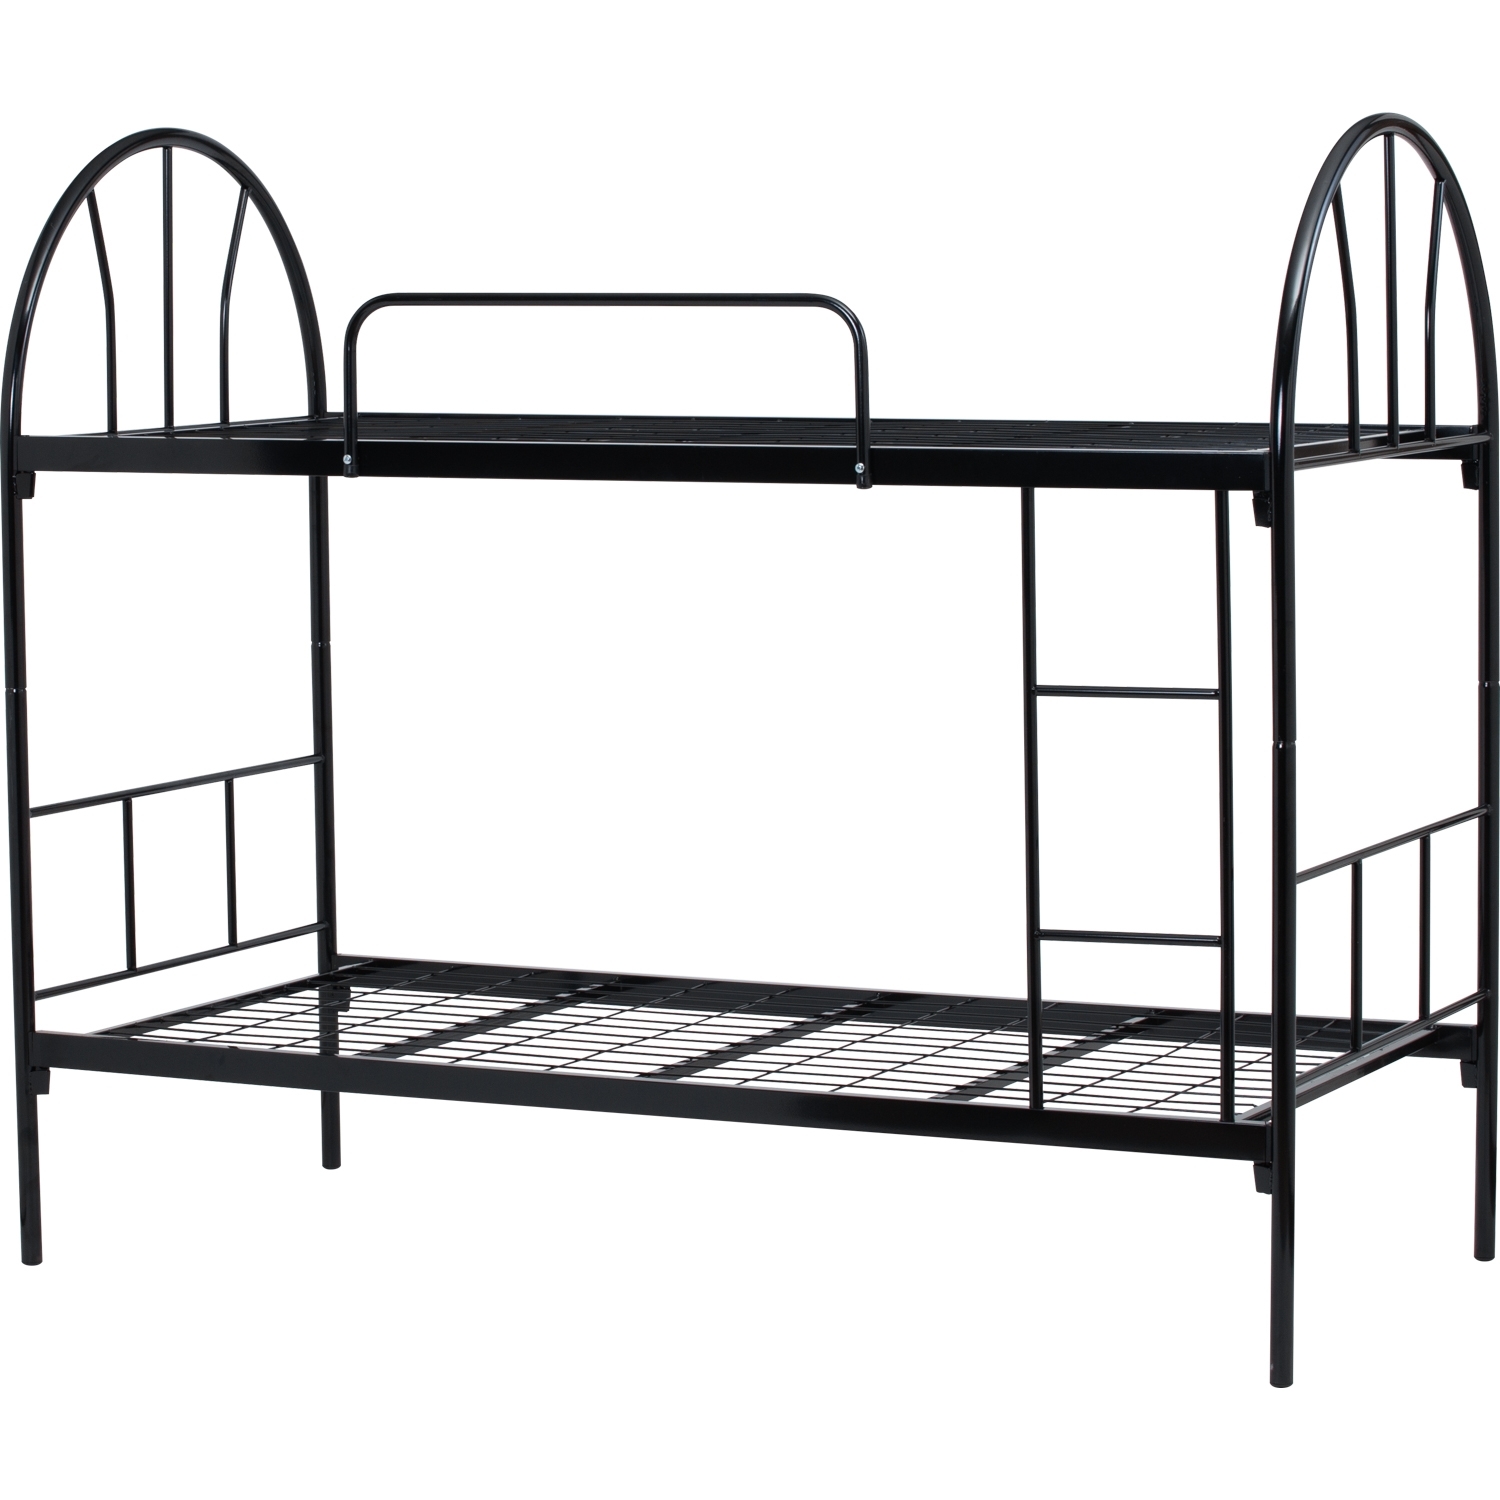 AIMIZON Euagles bunk bed in Black colour